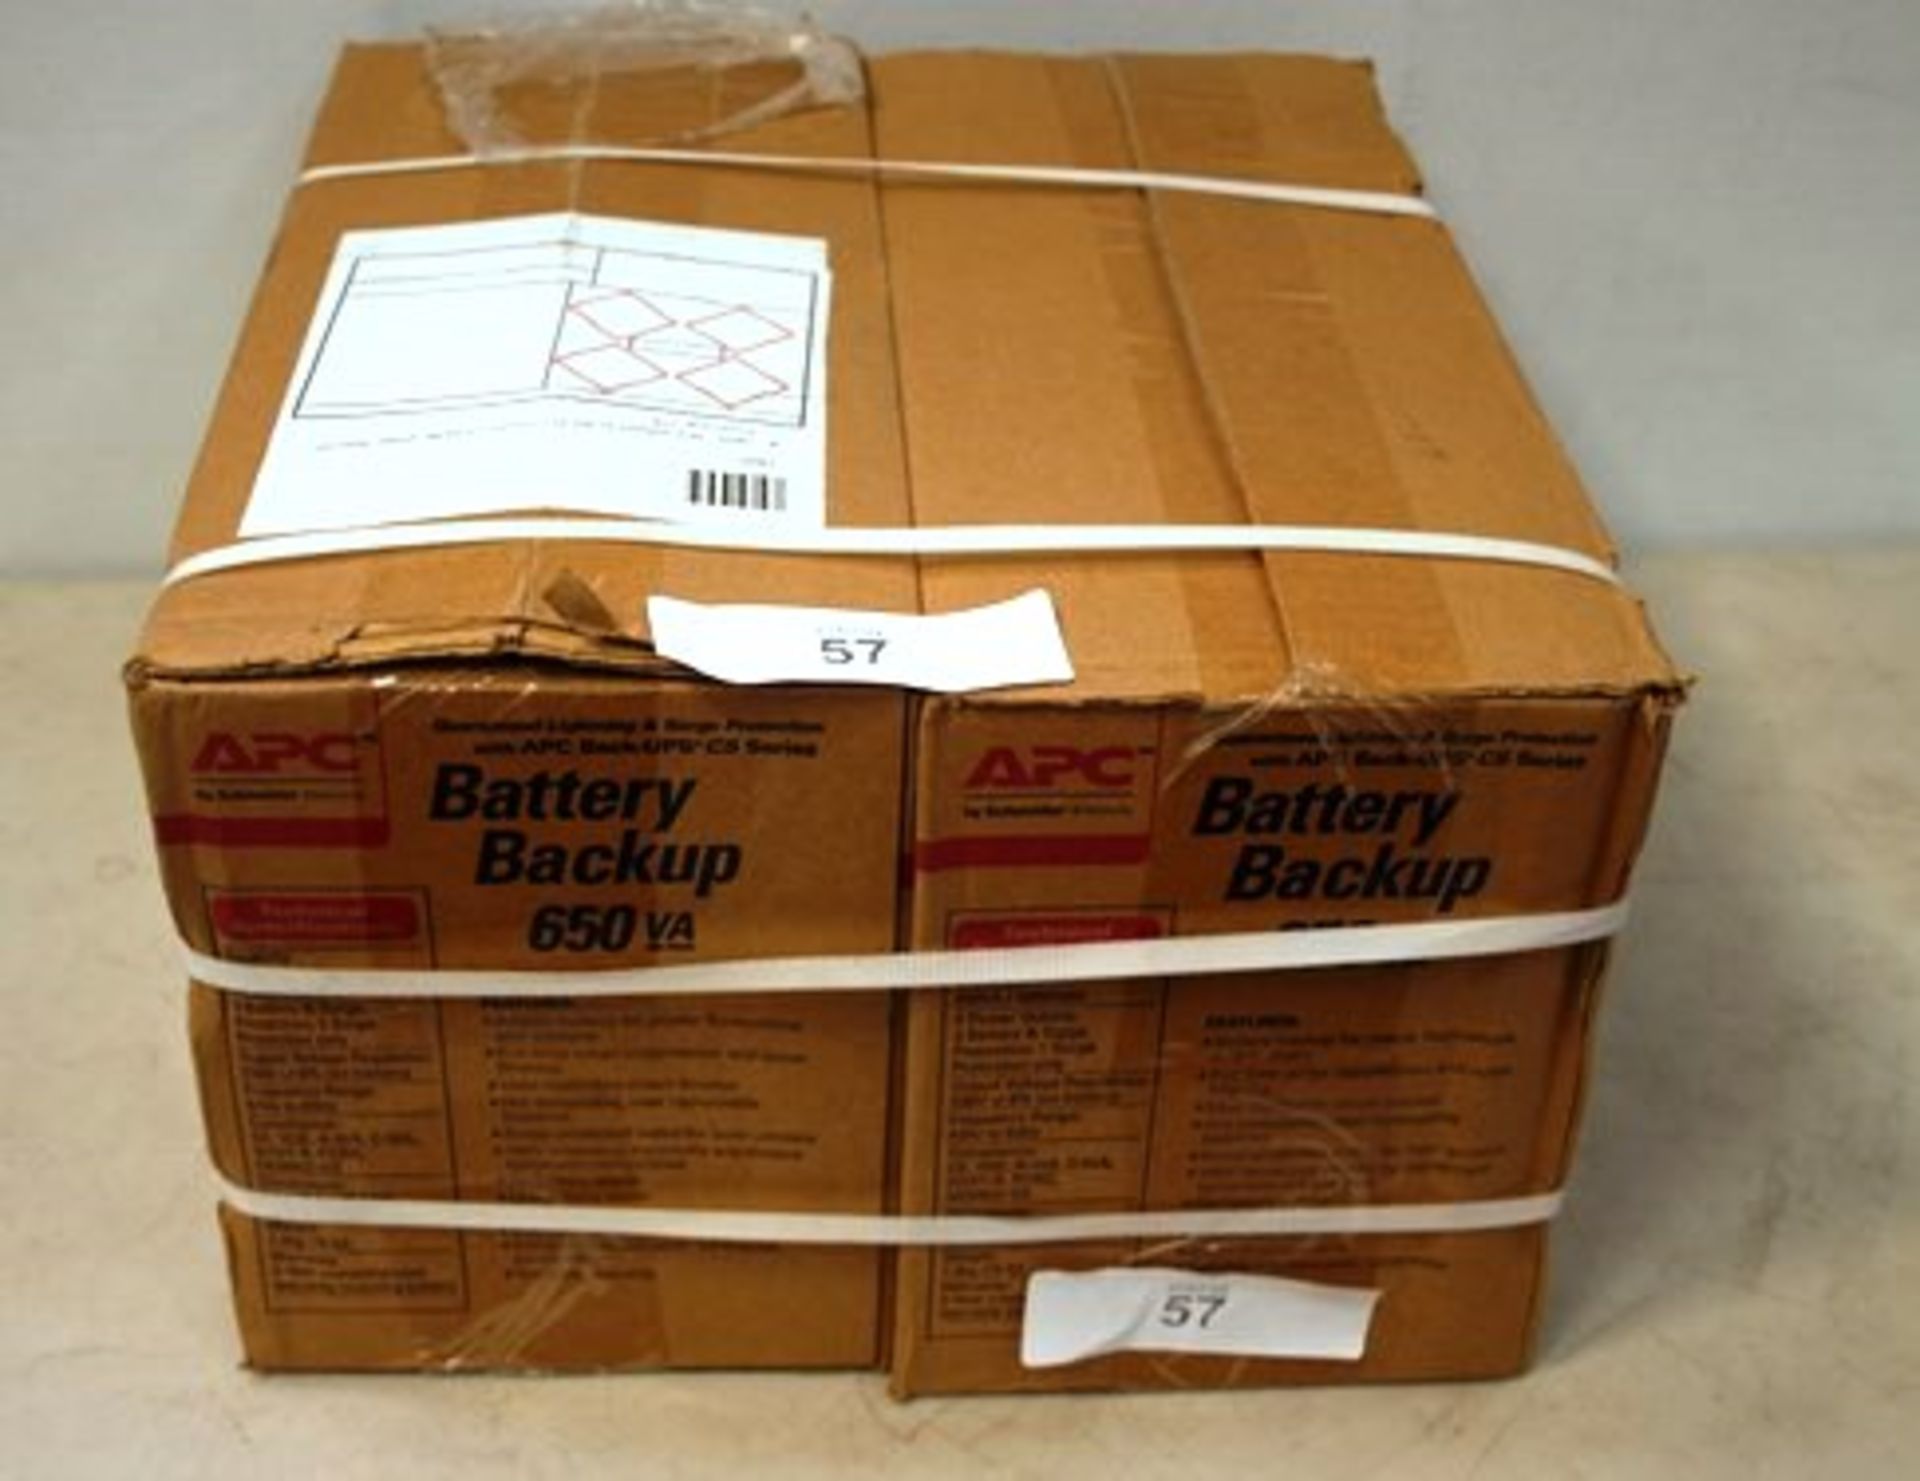 2 x APC 650VA 400W battery backup systems - Sealed new in box (ES3)